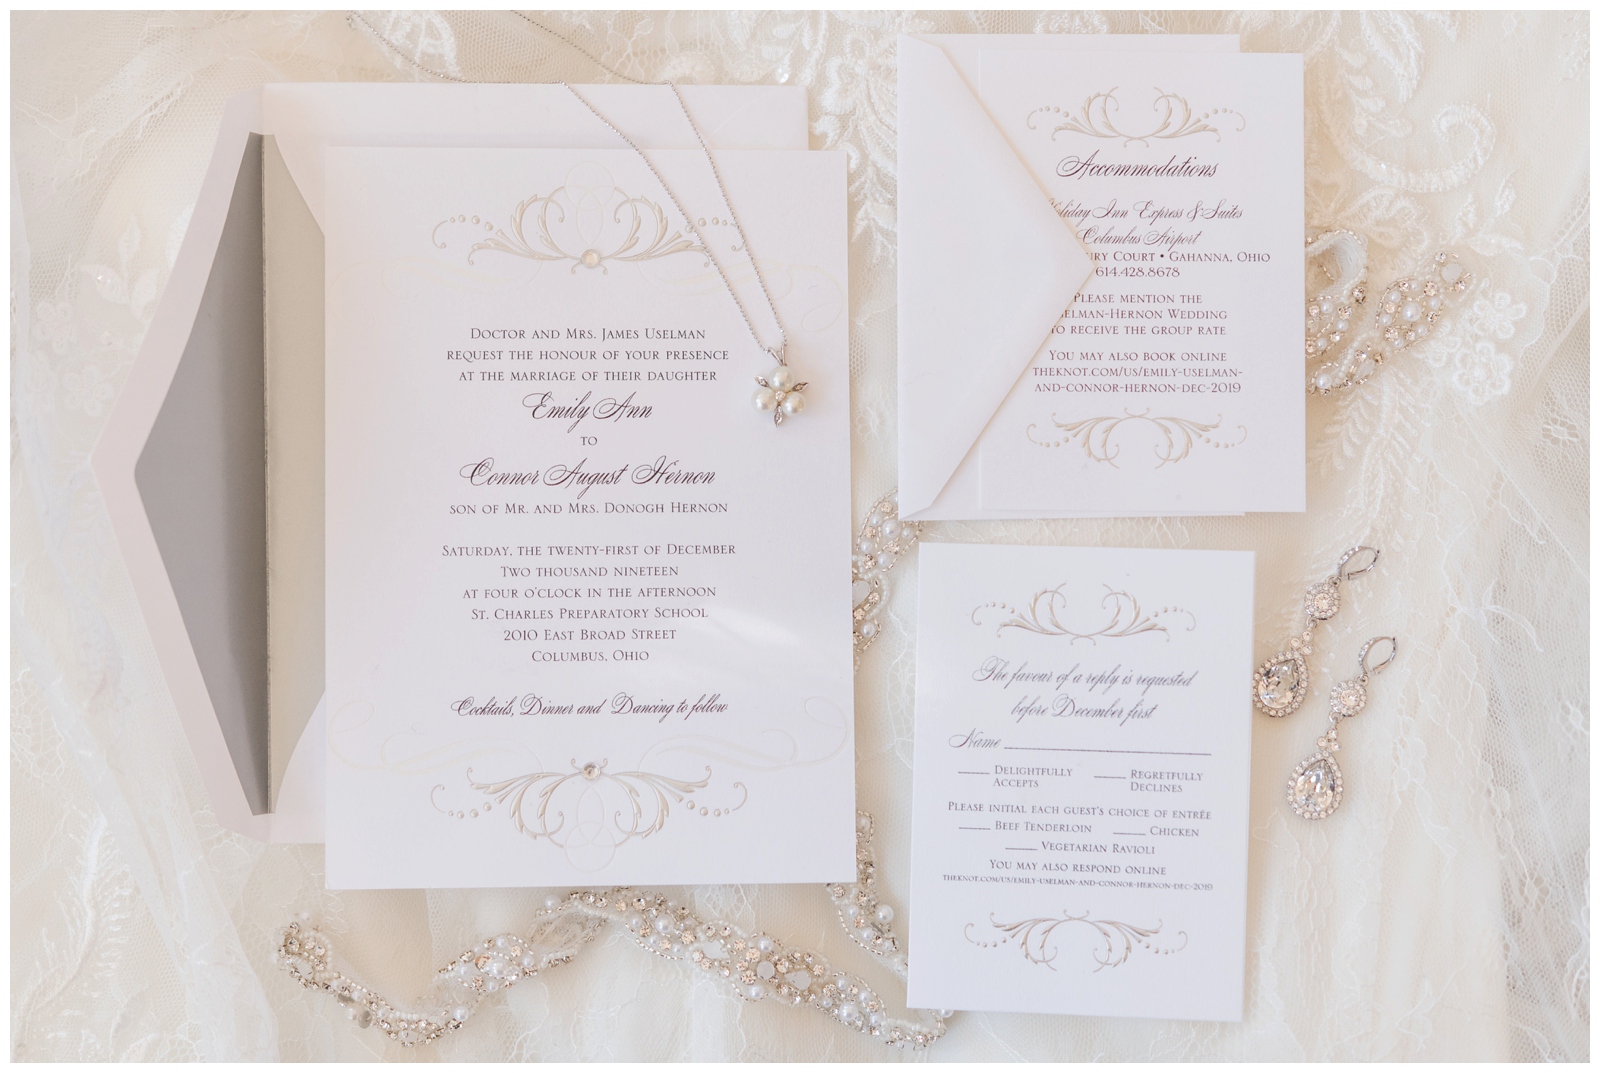 elegant ivory and gold wedding invitations for St. Charles Preparatory School wedding